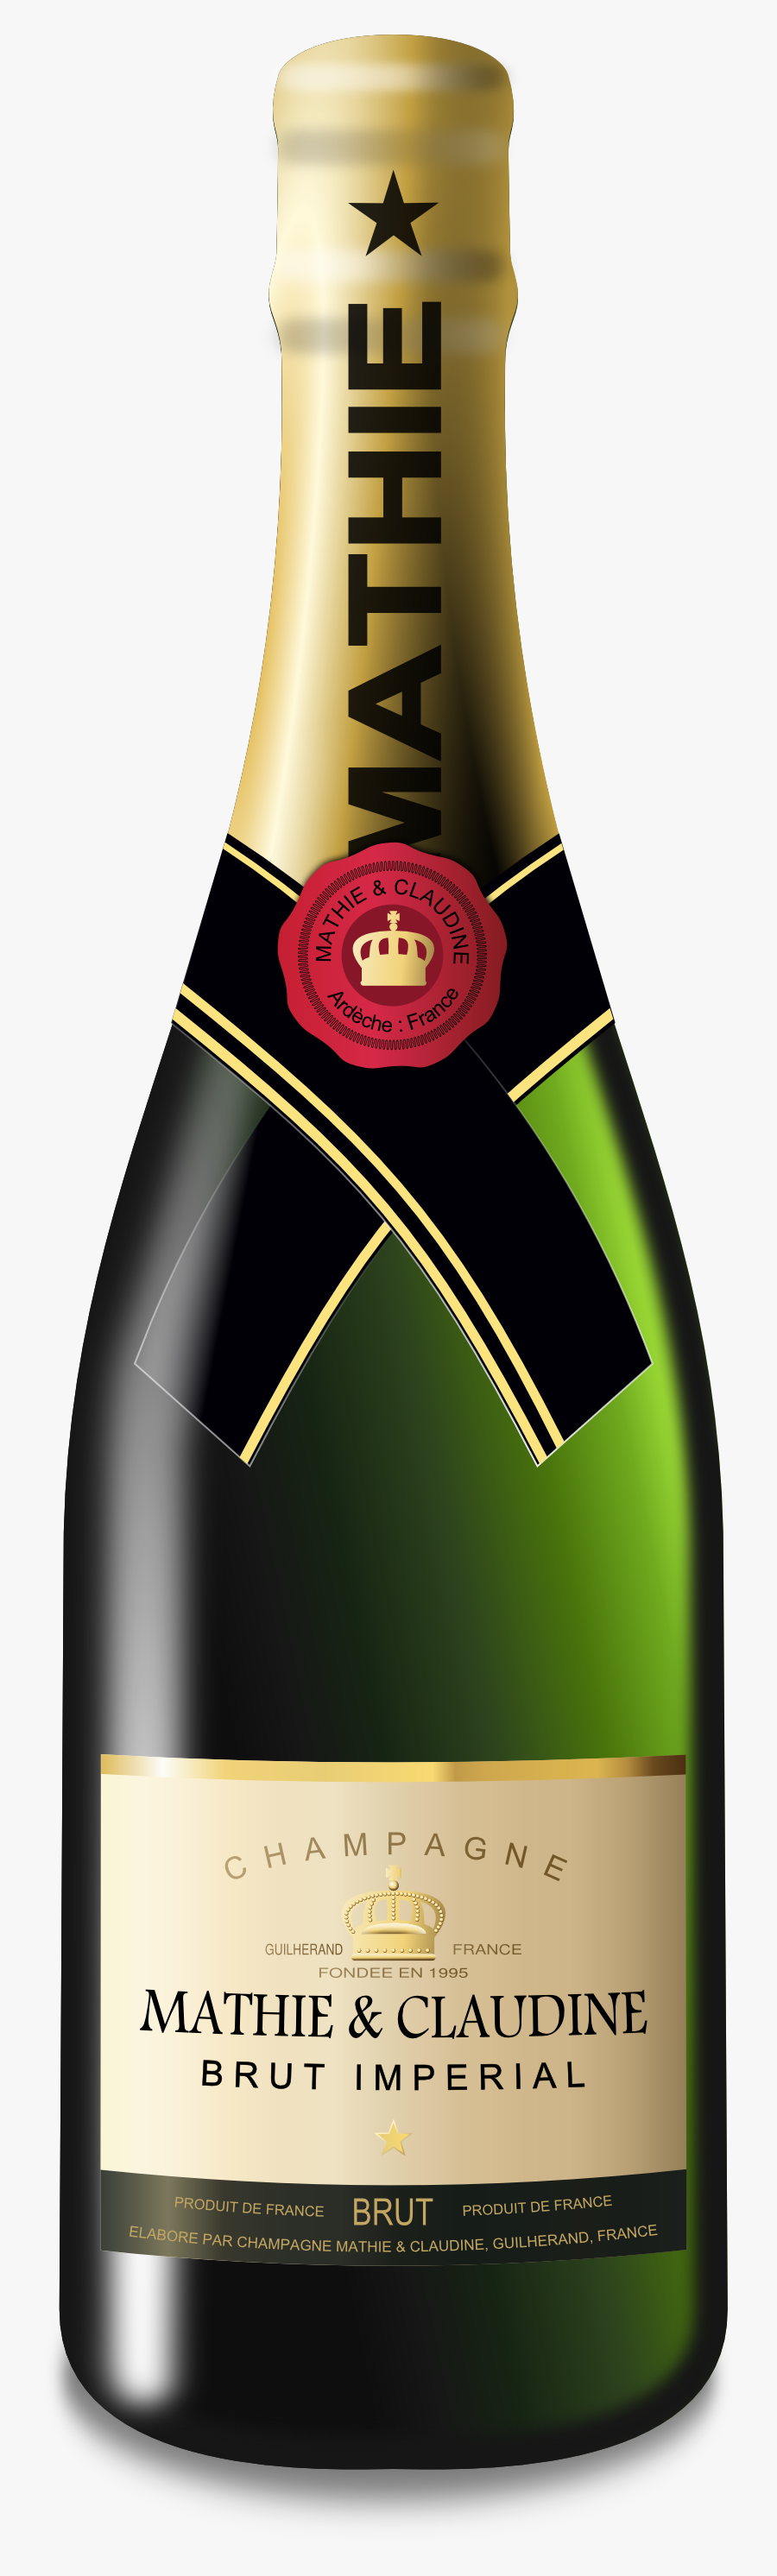 Champagne Wine Bottle Png, Transparent Clipart